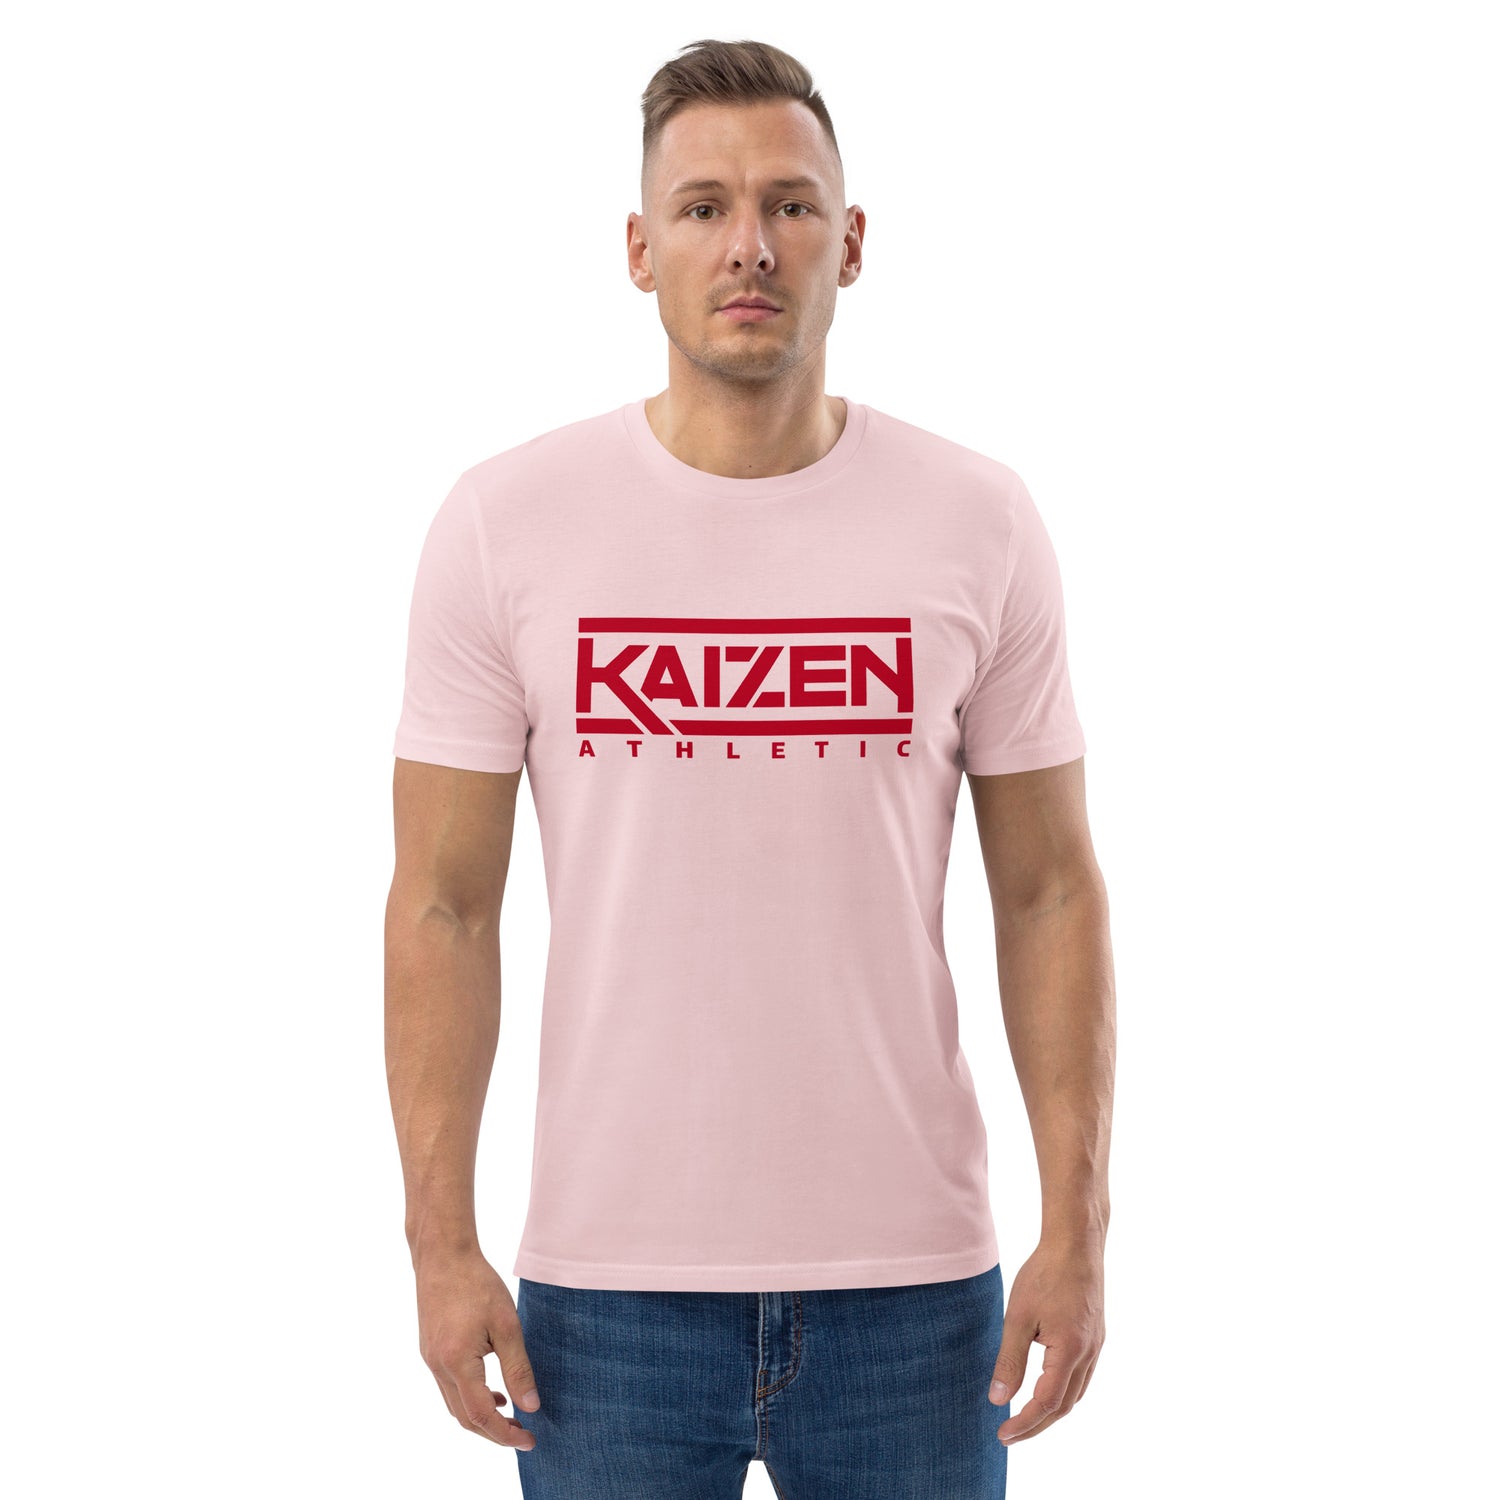 Unisex Organic Cotton T-Shirt by Kaizen Athletic